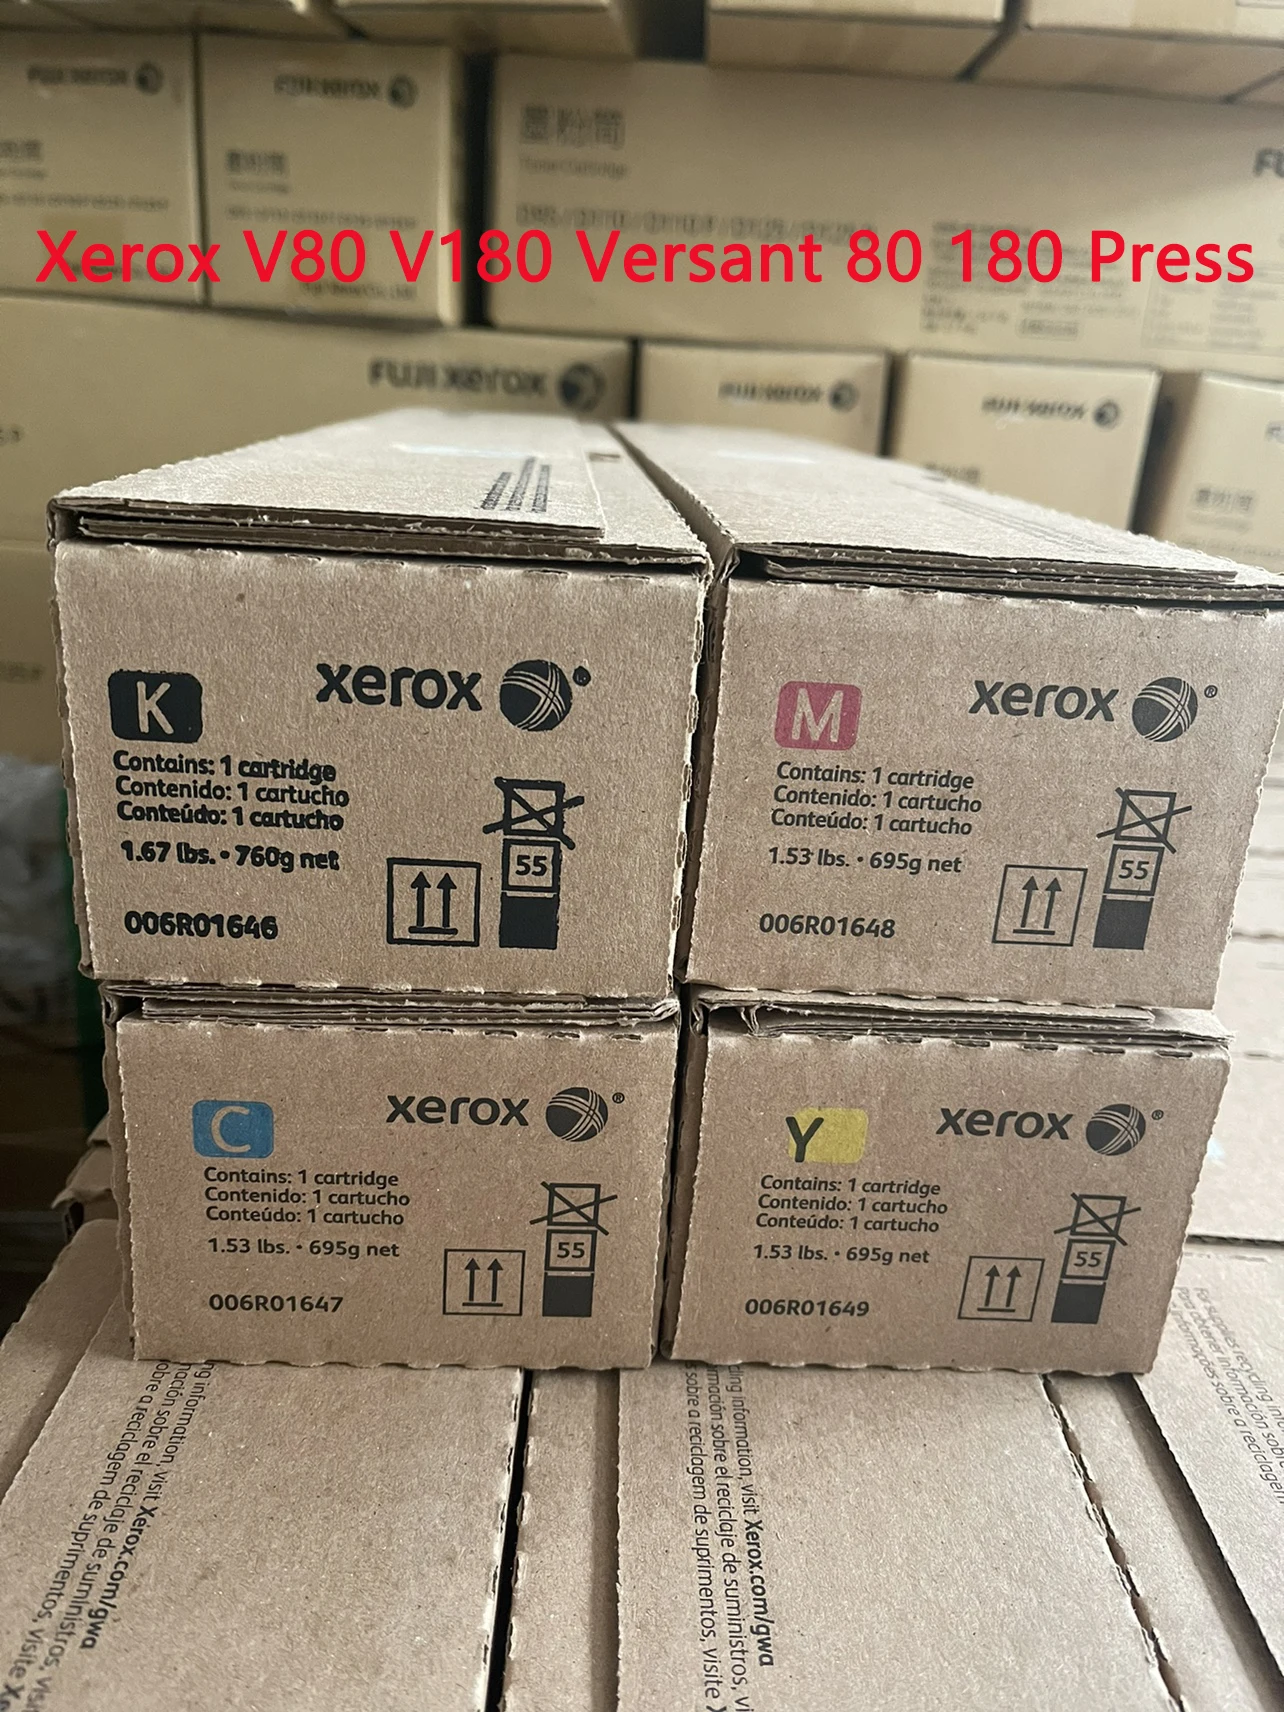 Original New US Version Toner Cartridge 006R01646 006R01647 006R01648 006R01649 for Xerox V80 V180 Versant 80 180 Press Europe